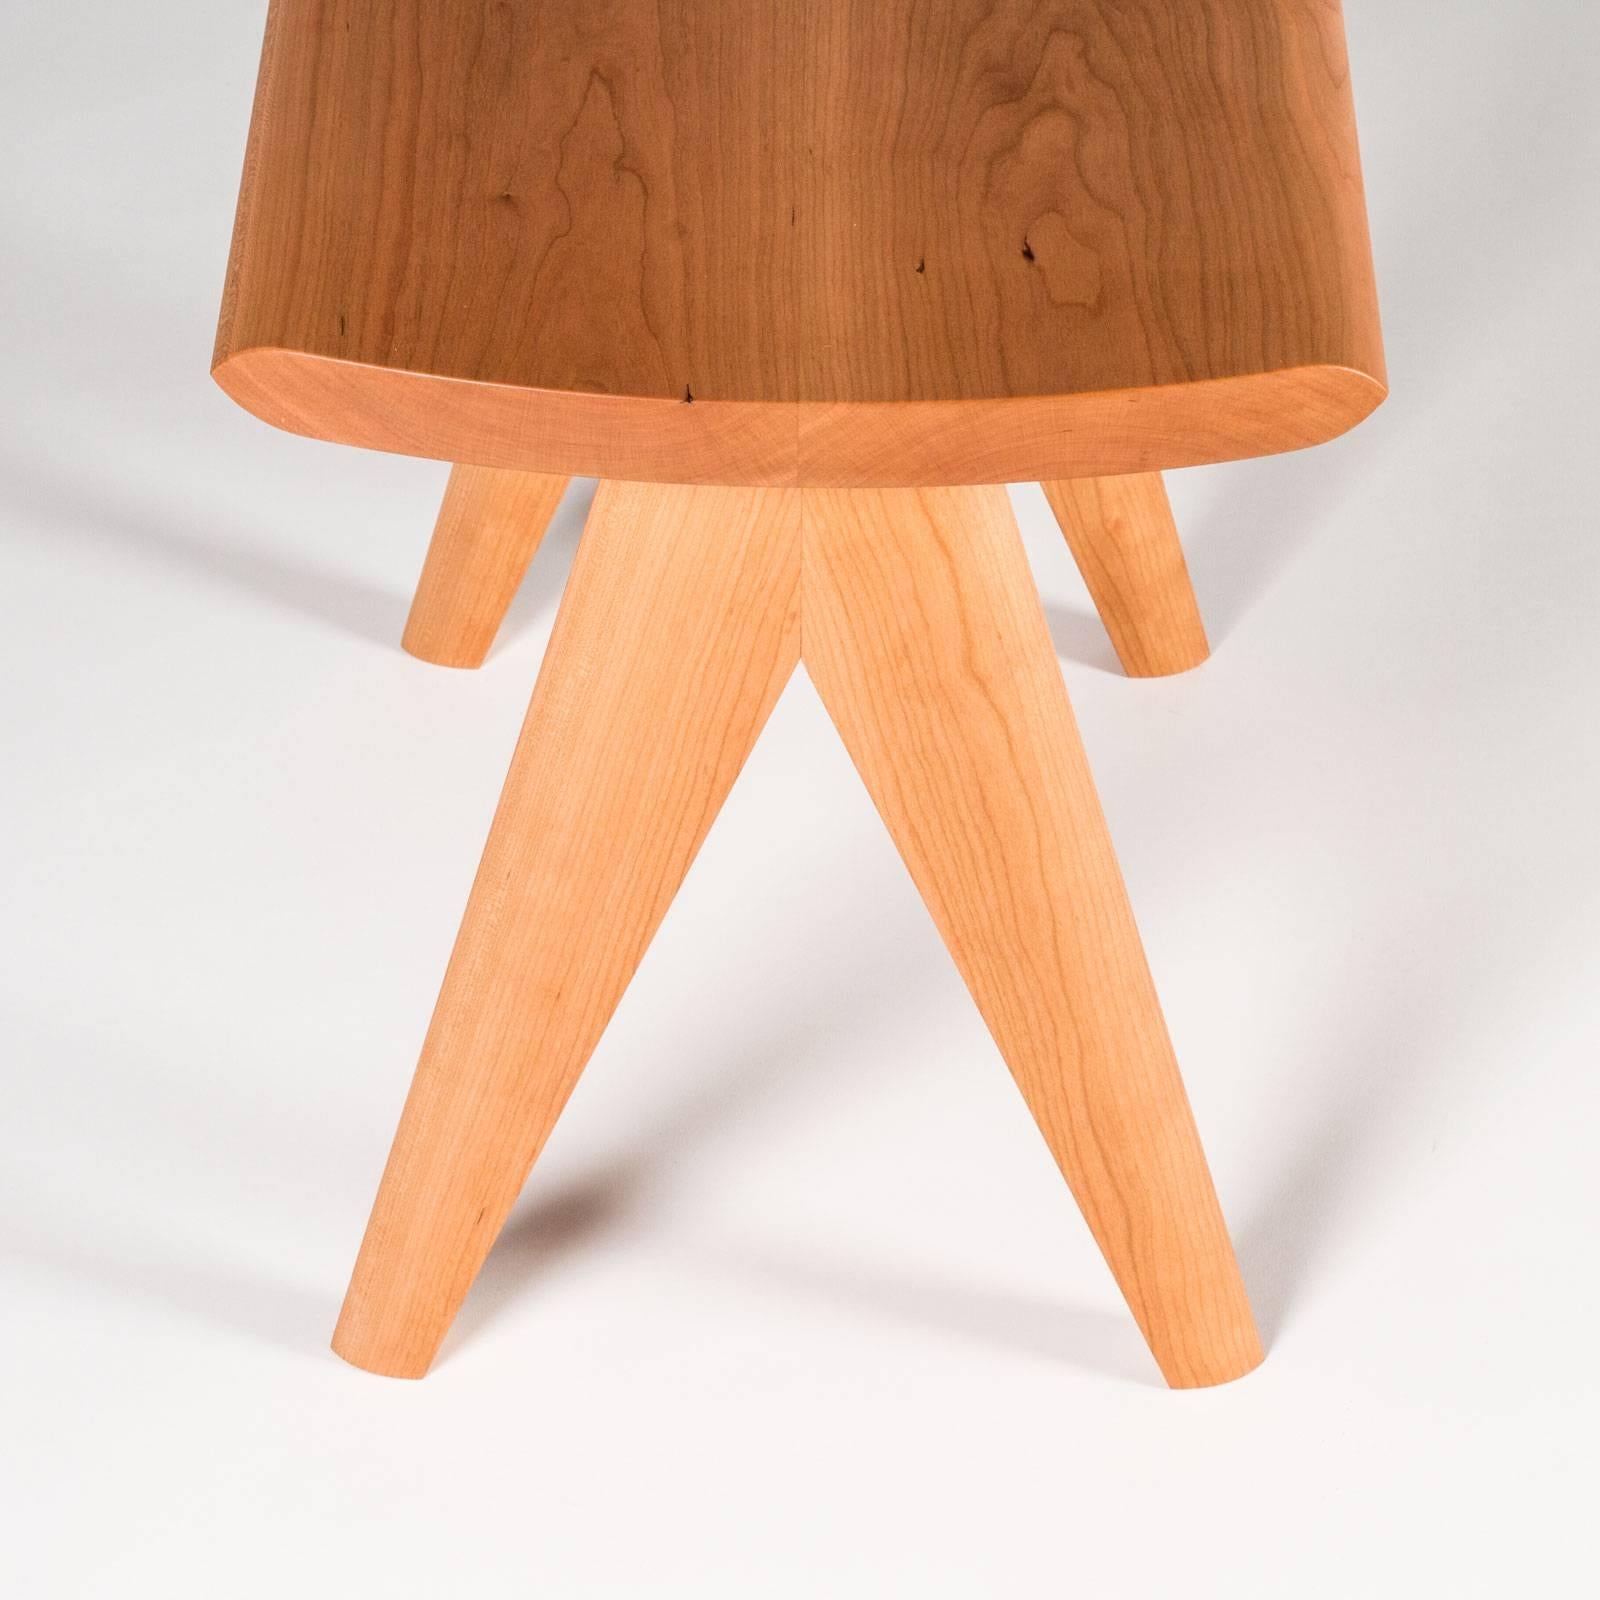 custom wooden stools